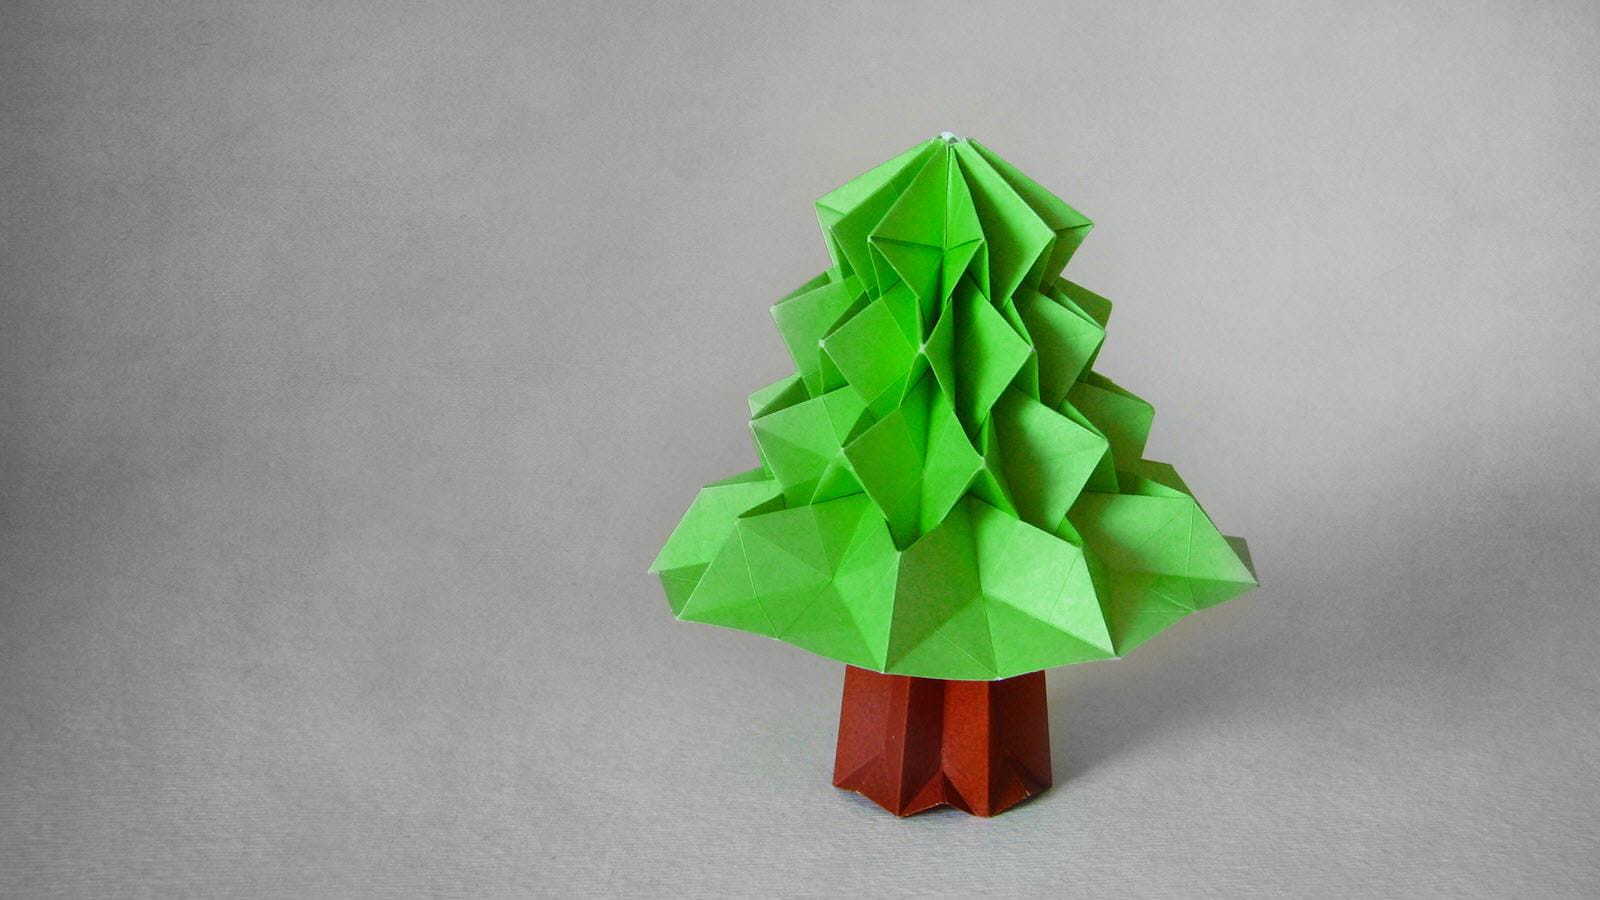 origami tree